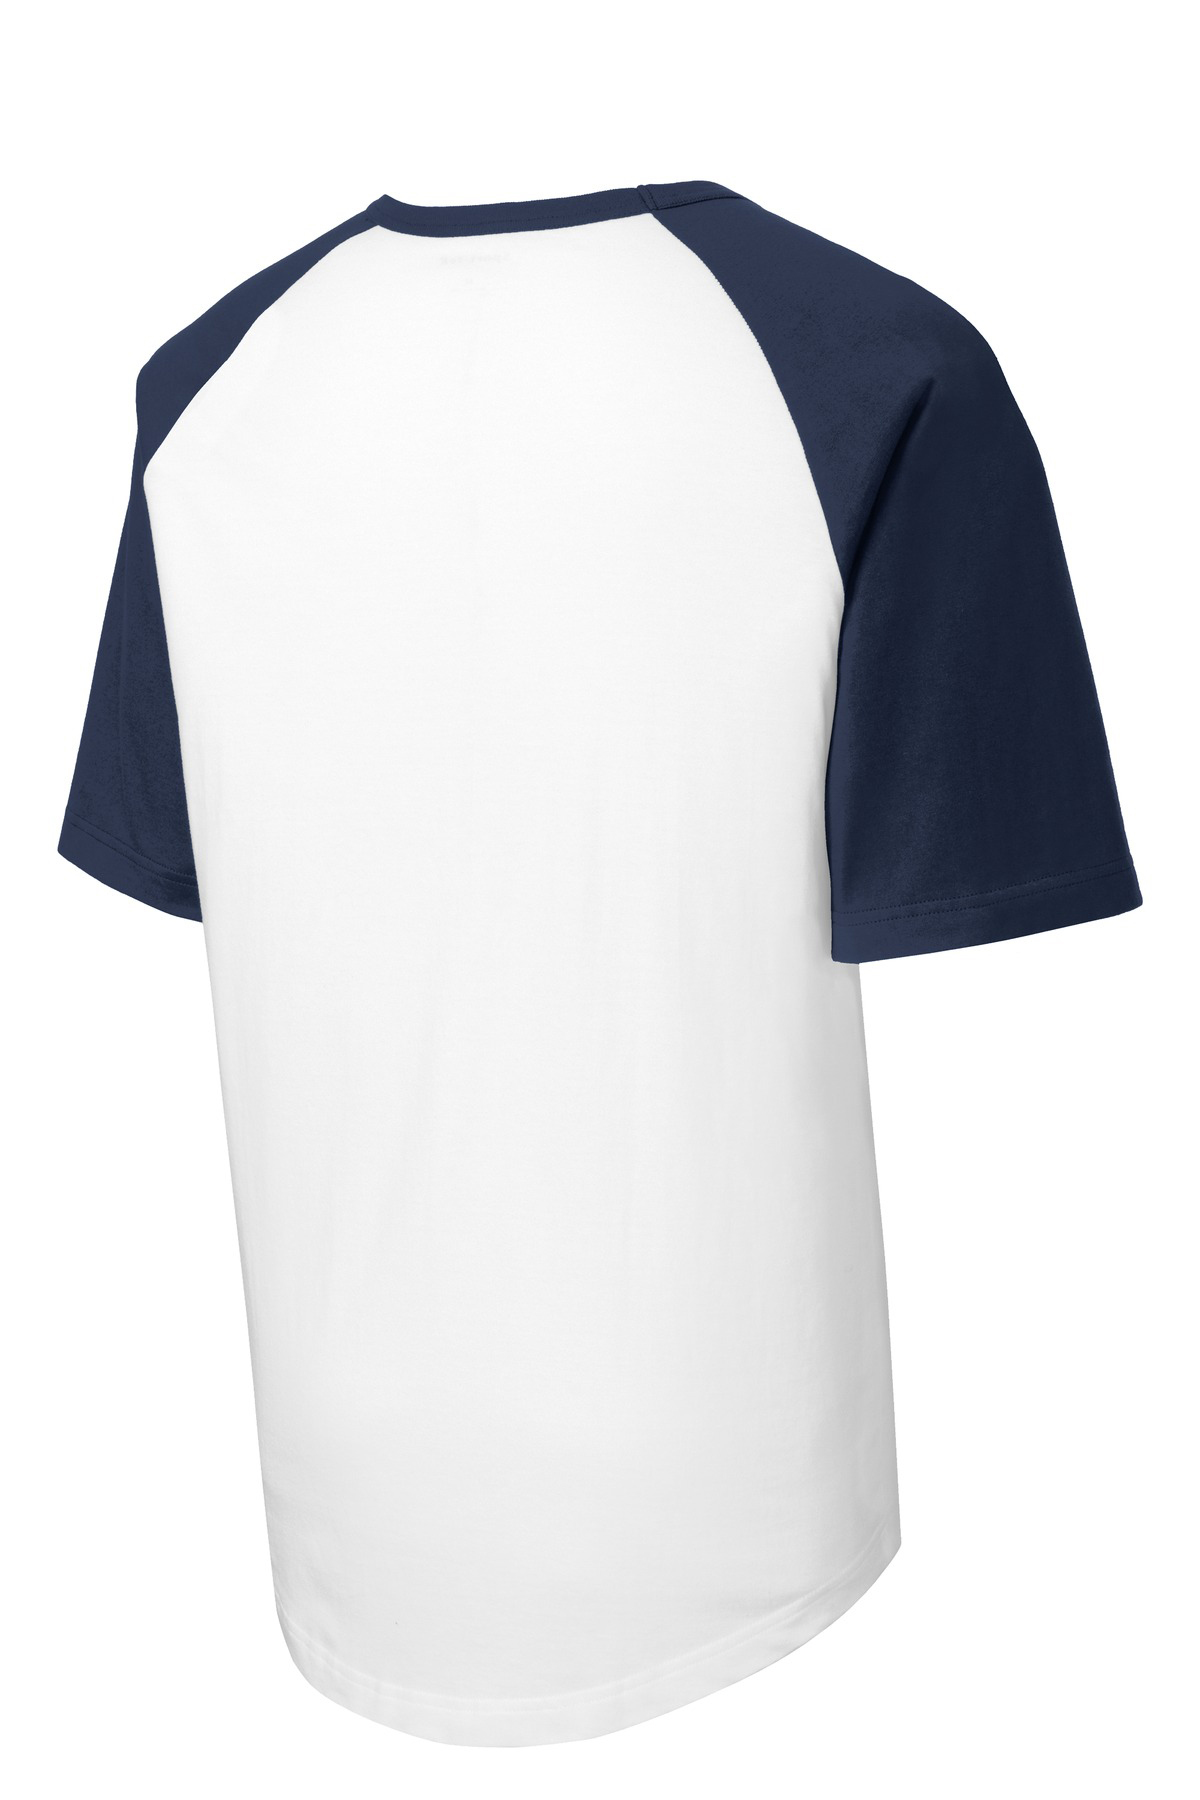 Sport-Tek Youth Short Sleeve Colorblock Raglan Jersey | Product | SanMar